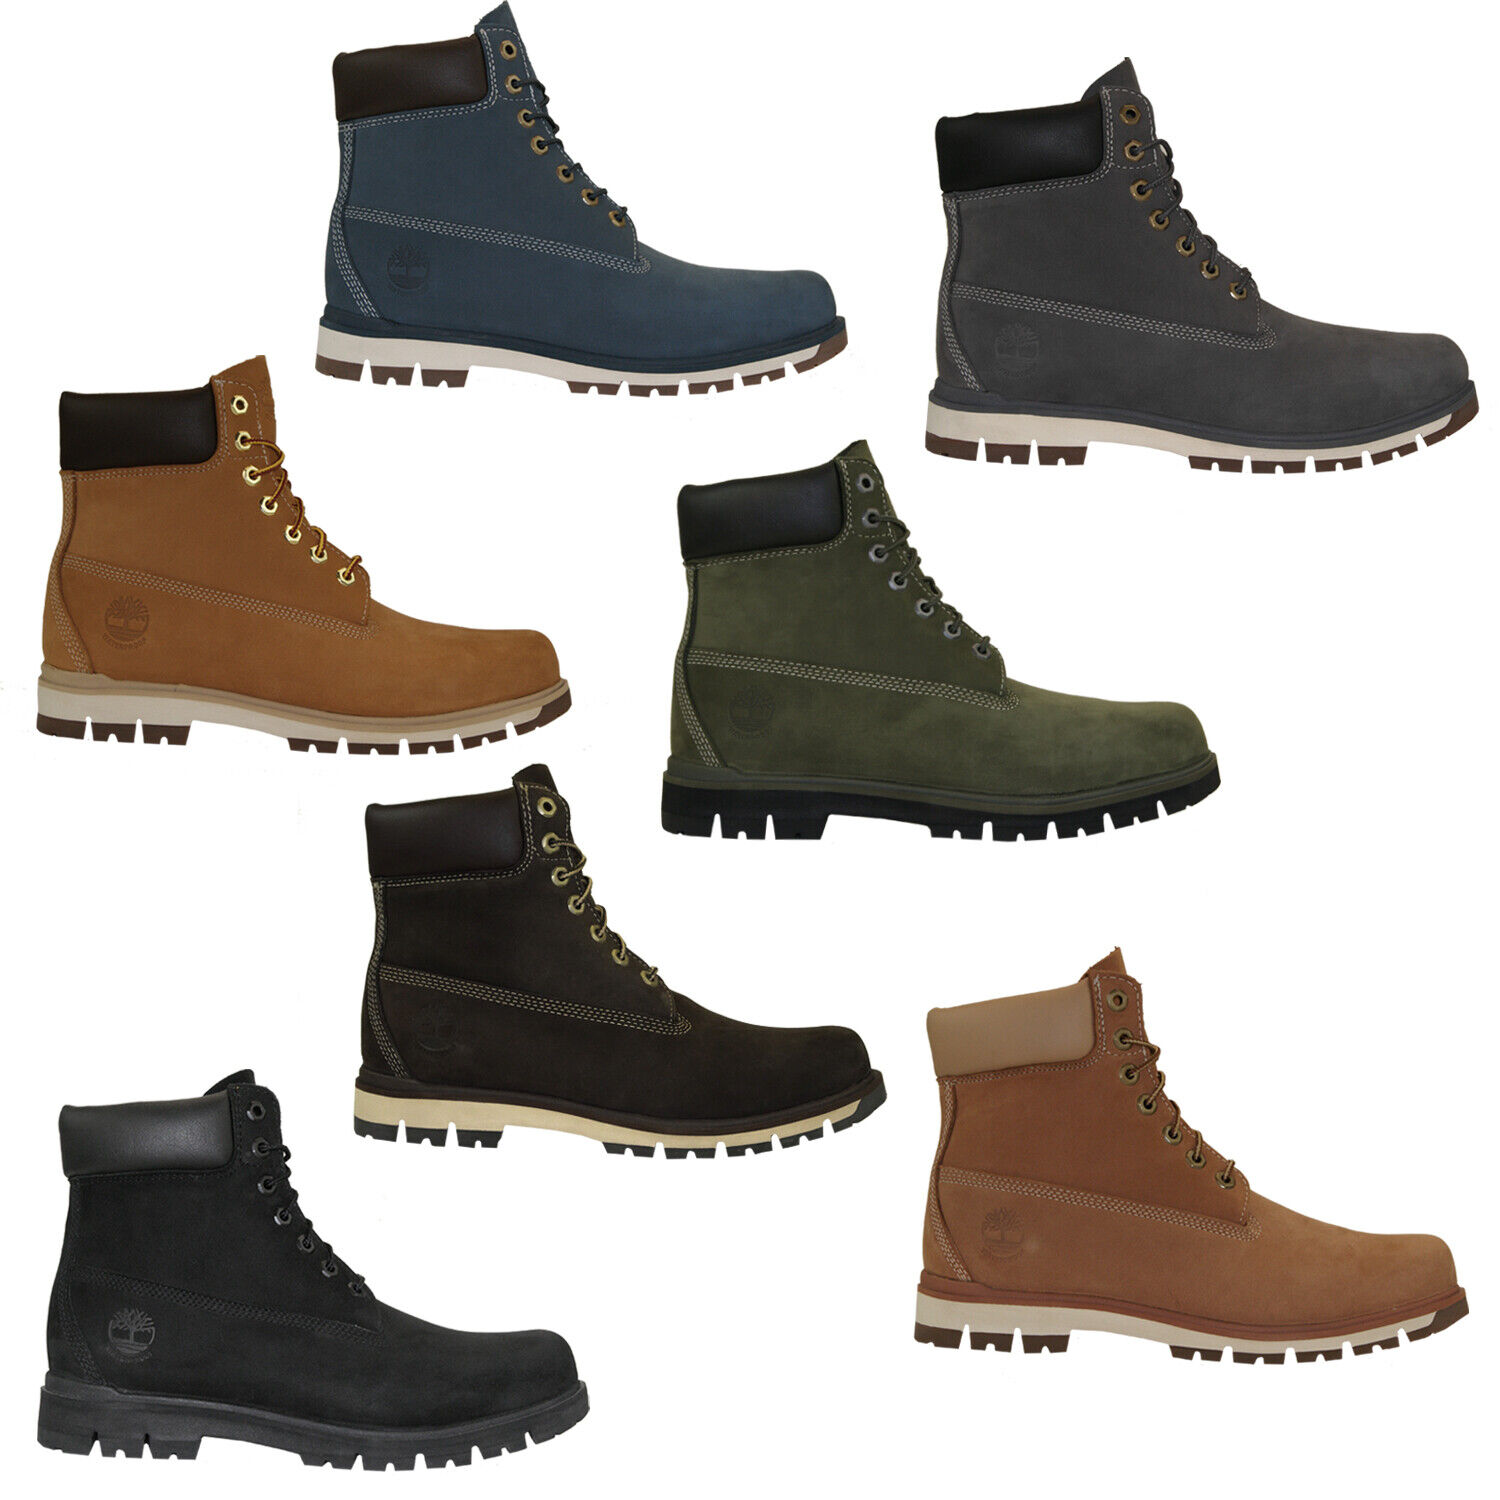 Timberland 6 Inch Boots Radford Waterproof Herren Schuhe Stiefel SensorFlex Farbe Grau Schuhgröße EUR 43,5 US 9,5W